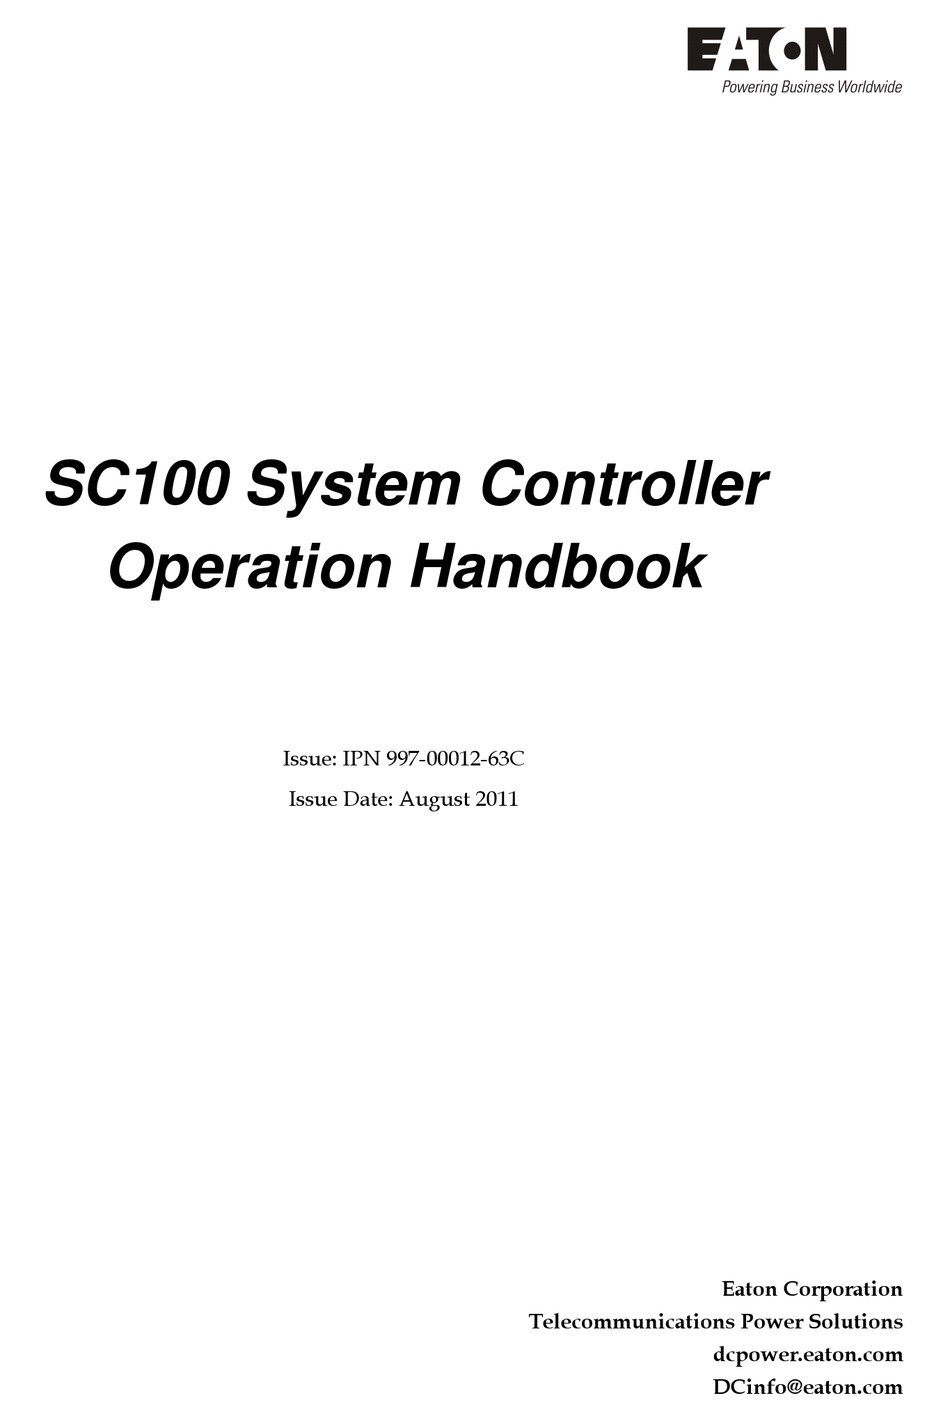 Eaton SC 200 System DC controller